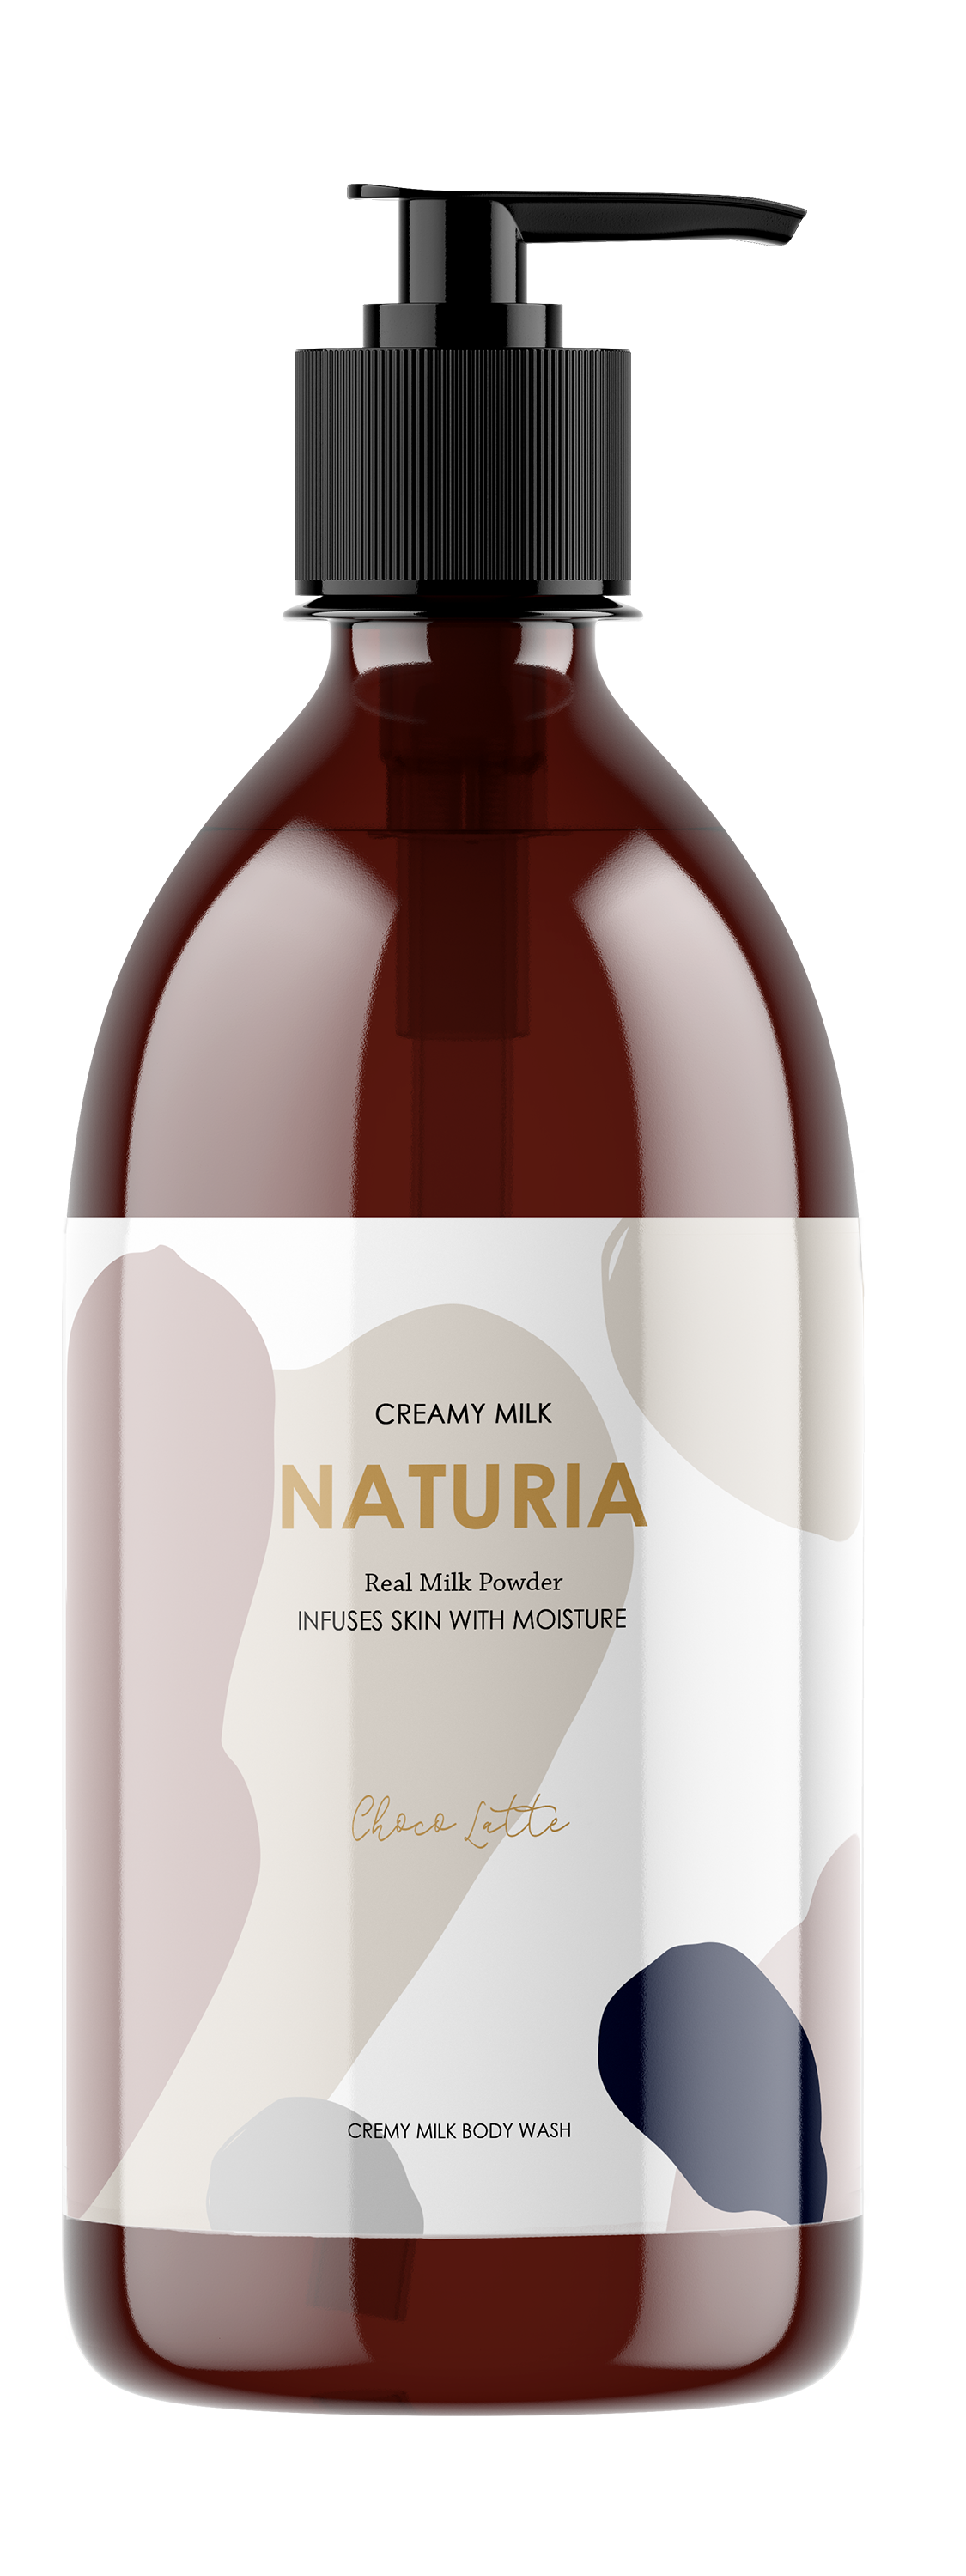 Evas Naturia Creamy Milk Body Wash - Choco latte Гель для душа c ароматом шоколада, 750мл